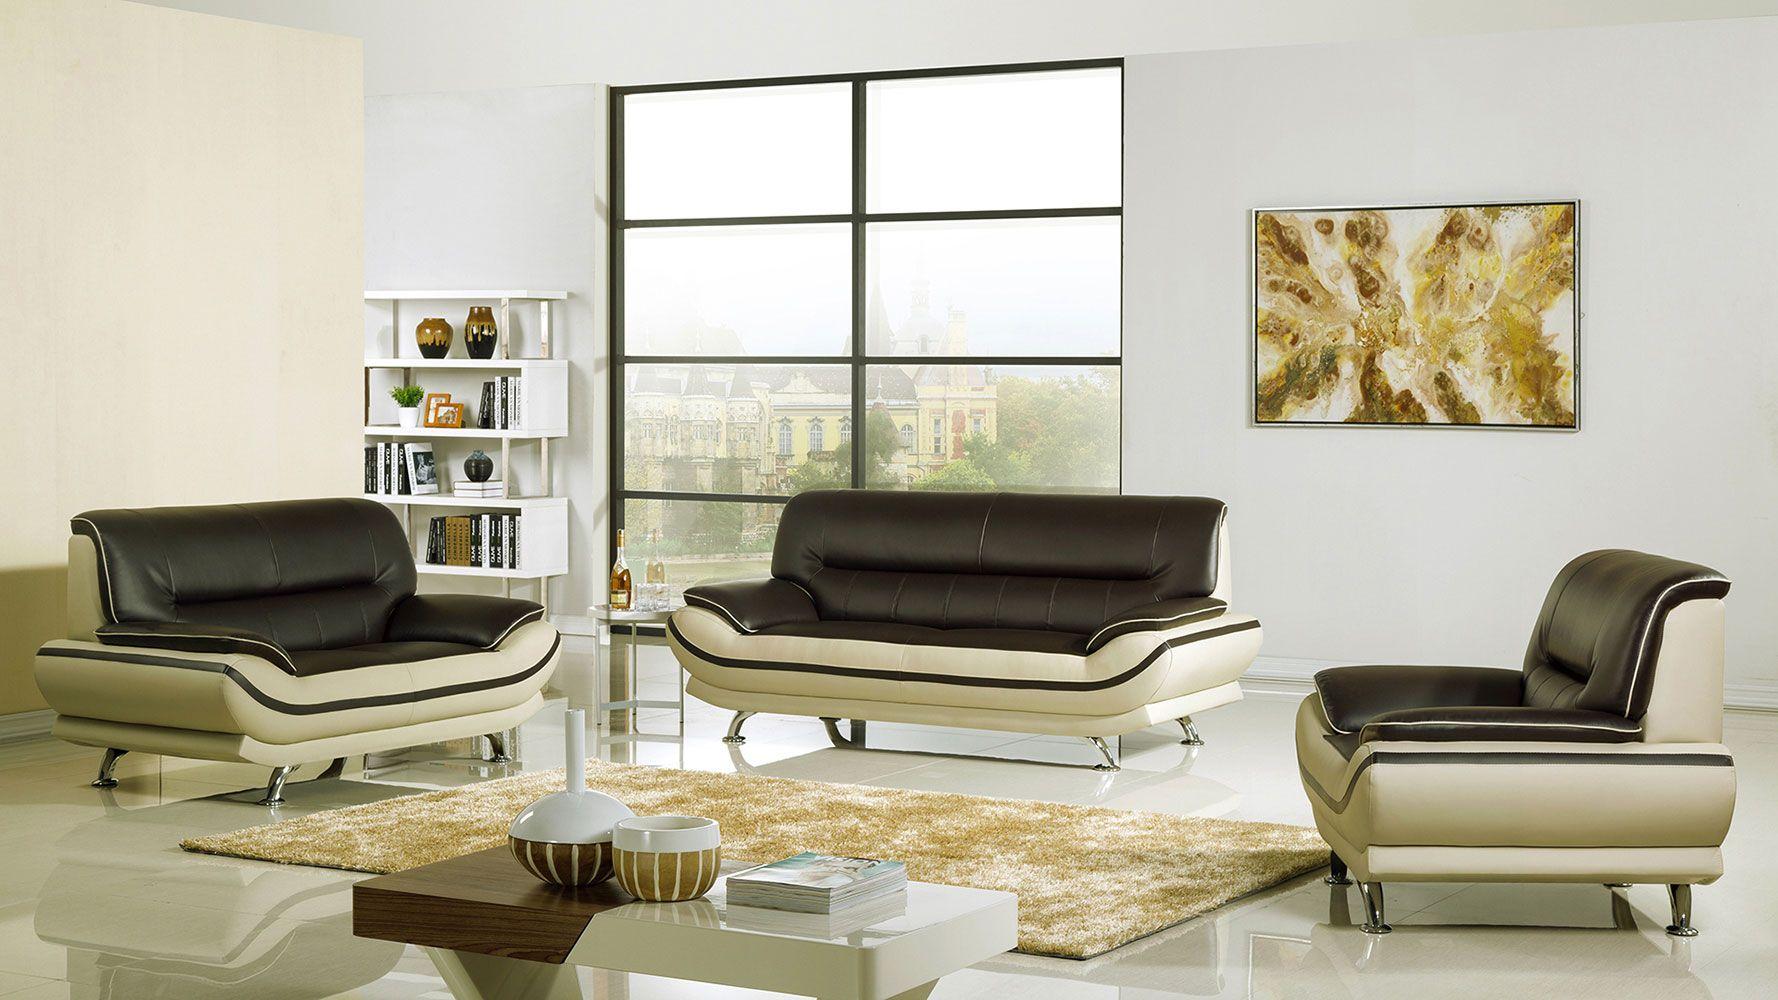 

    
American Eagle Furniture AE709-MA.LG Sofa Light Gray/Mahogany AE709-MA.LG-SF
